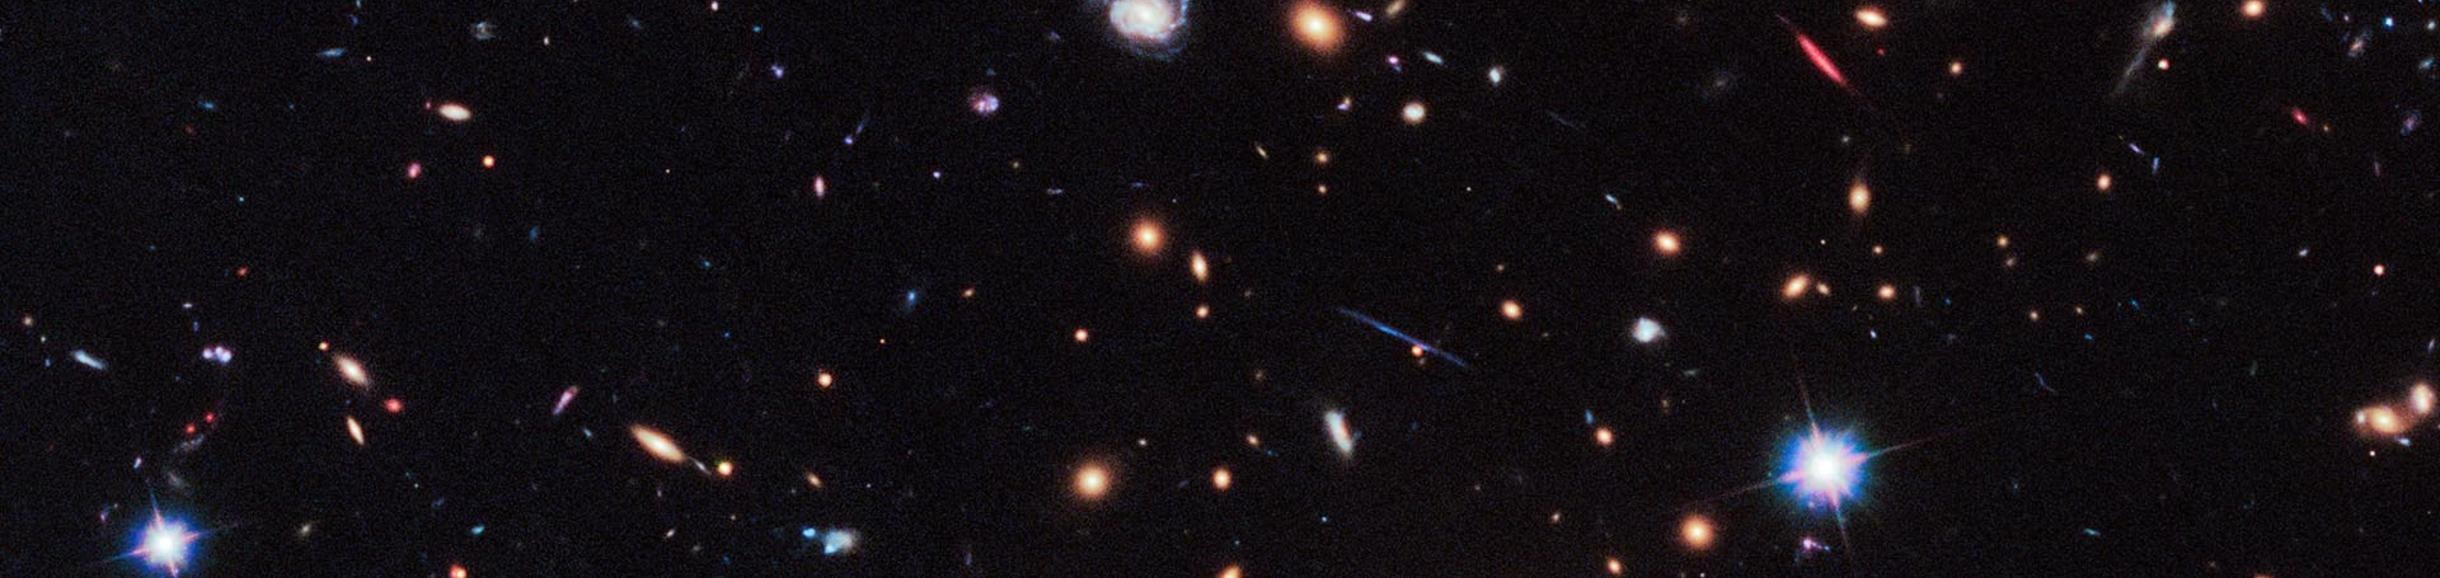 Galaxies taken with NASA's Hubble Space Telescope (c) NASA Goddard